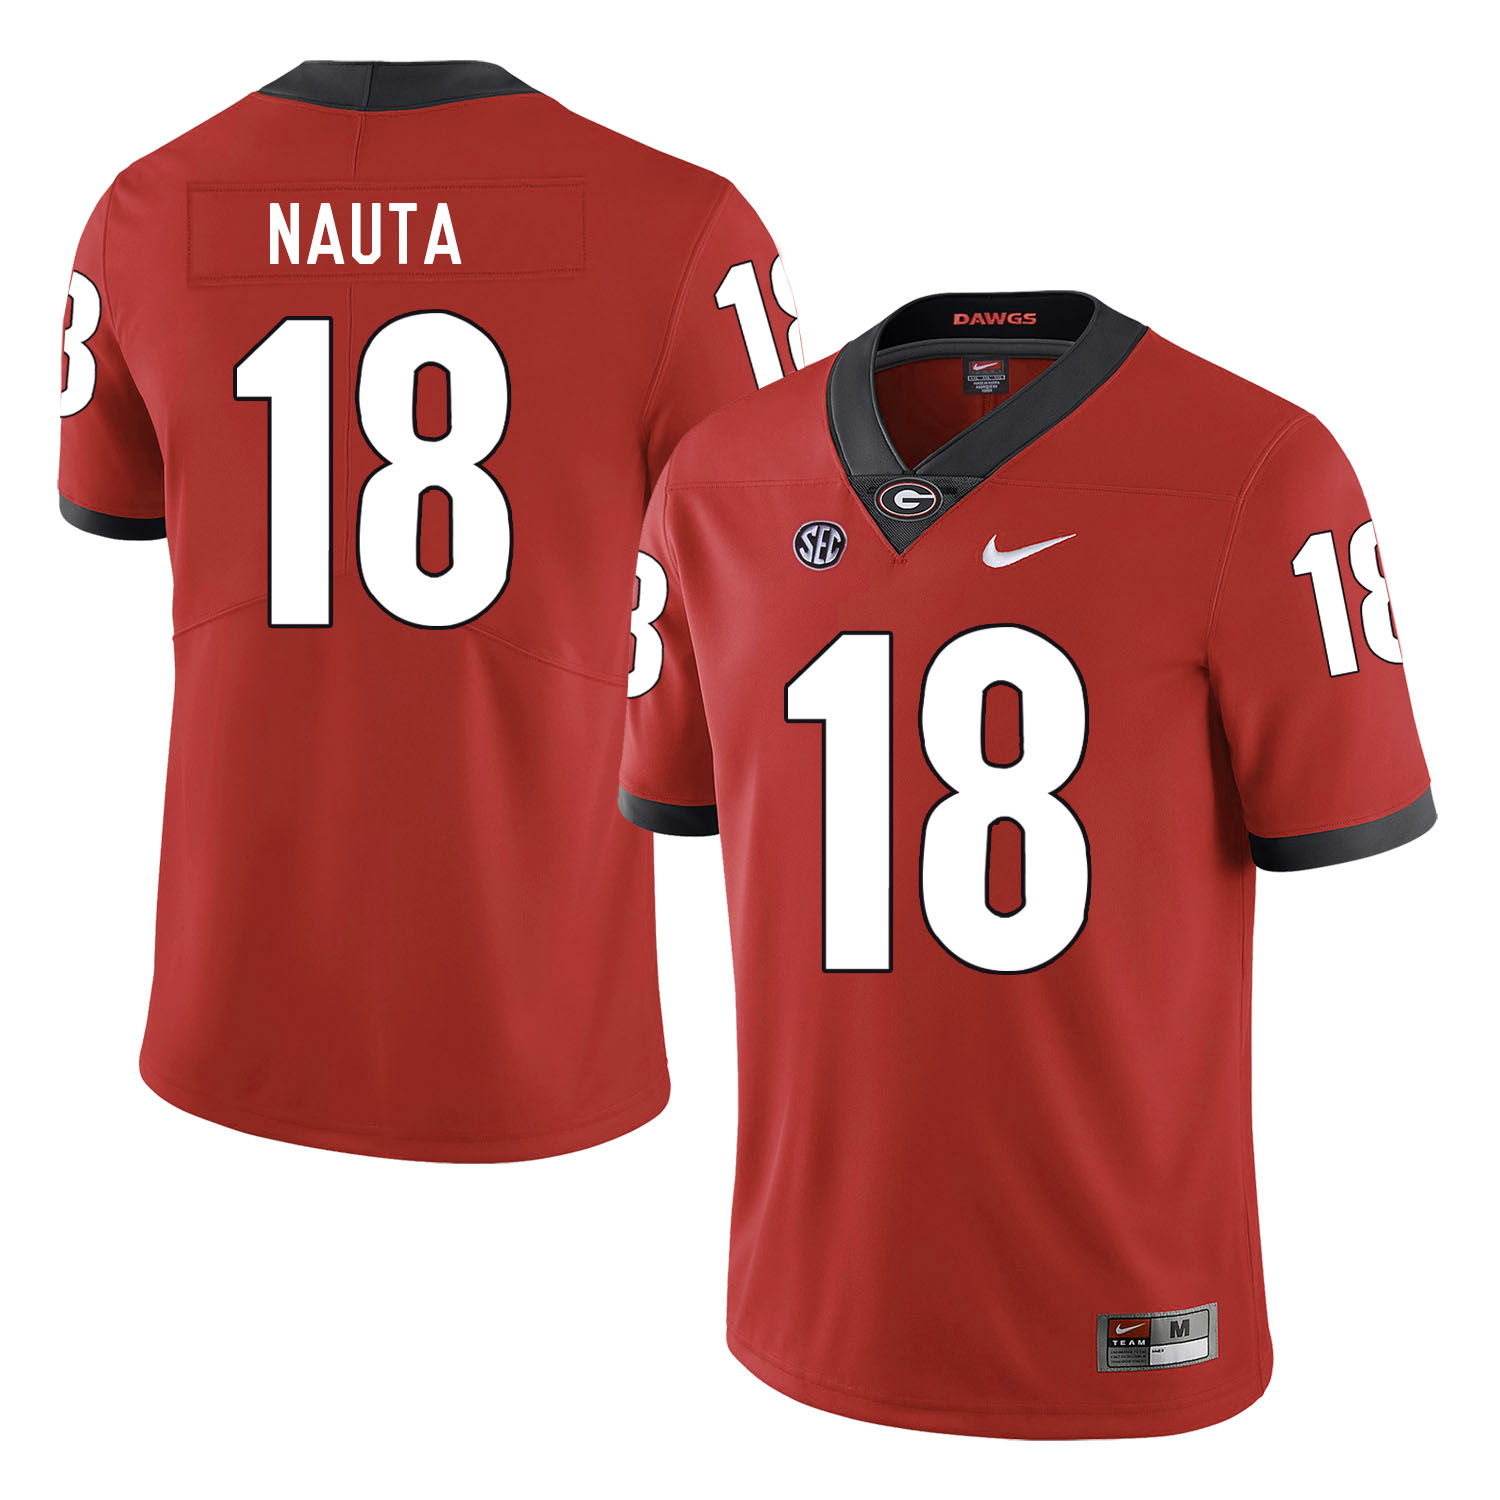 Men's Georgia Bulldogs #18 Isaac Nauta Nike Red Football Jersey